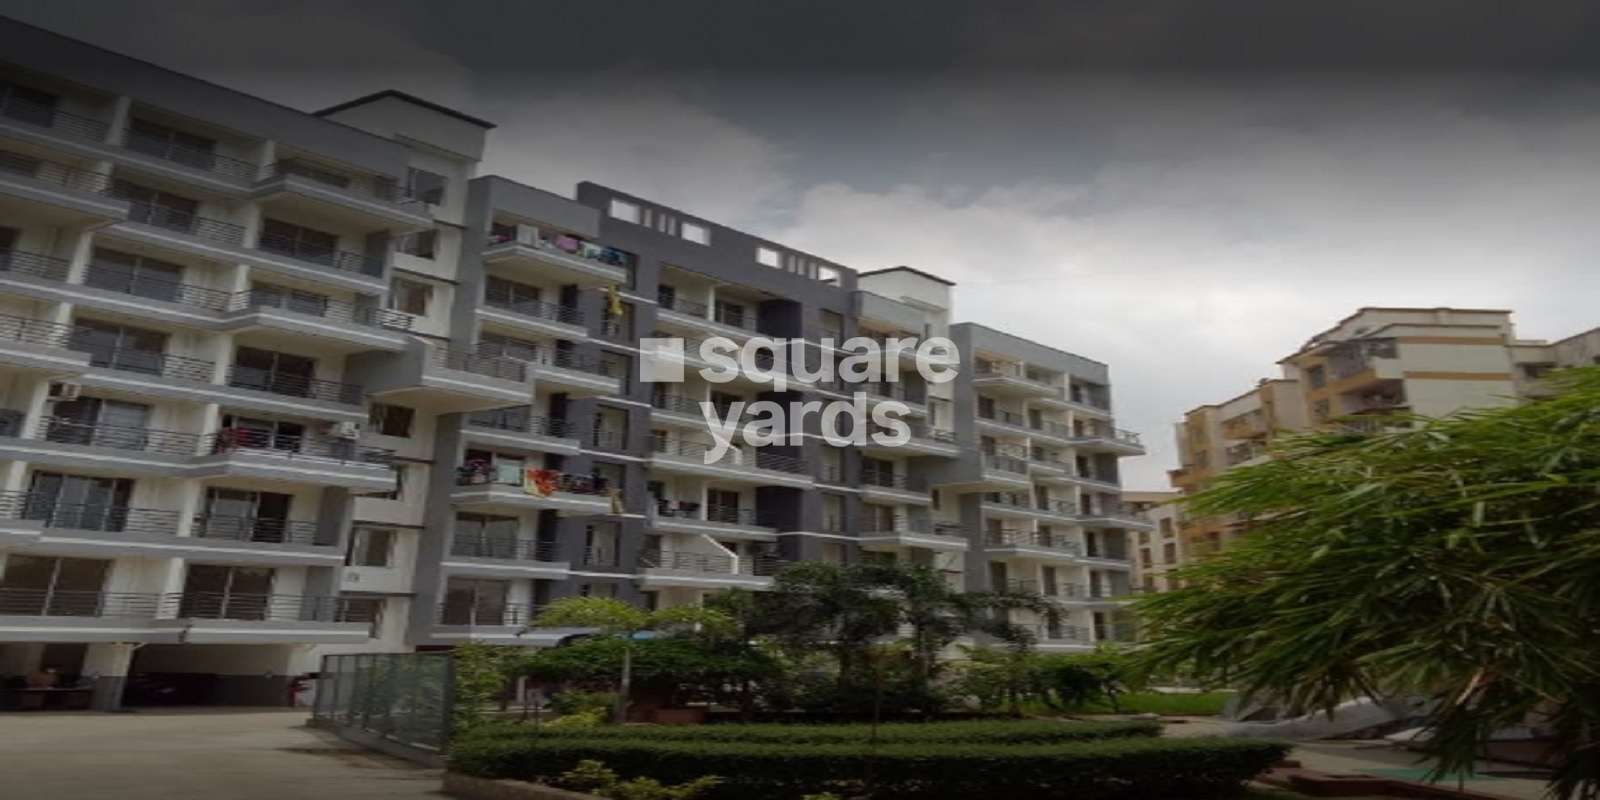 Tycoons Square in Kalyan West, Thane: Price, Brochure, Floor Plan, Reviews